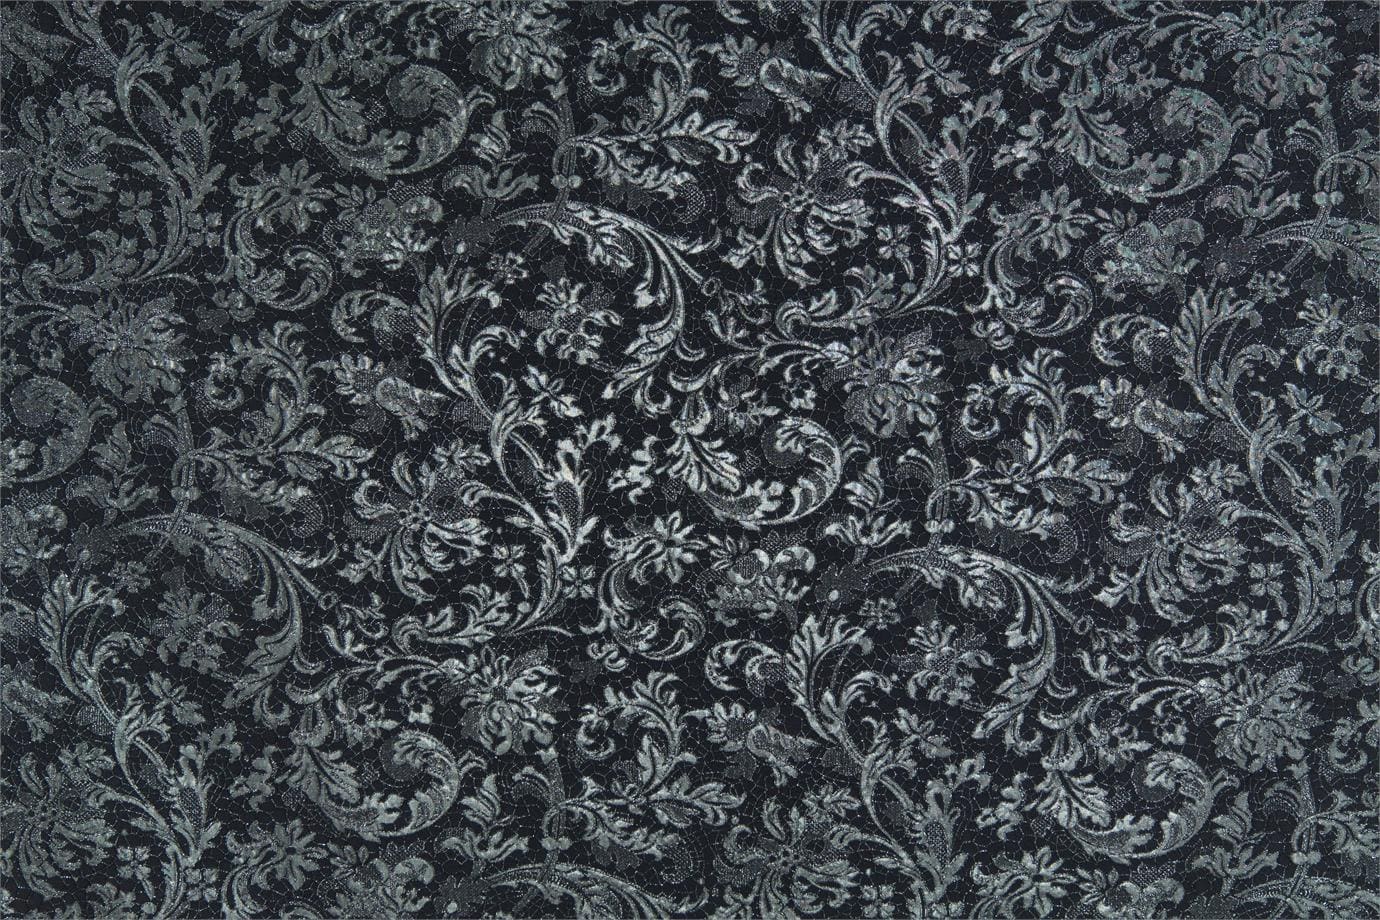 J4048 BOA BCO NE 001 Bianco nero home decoration fabric